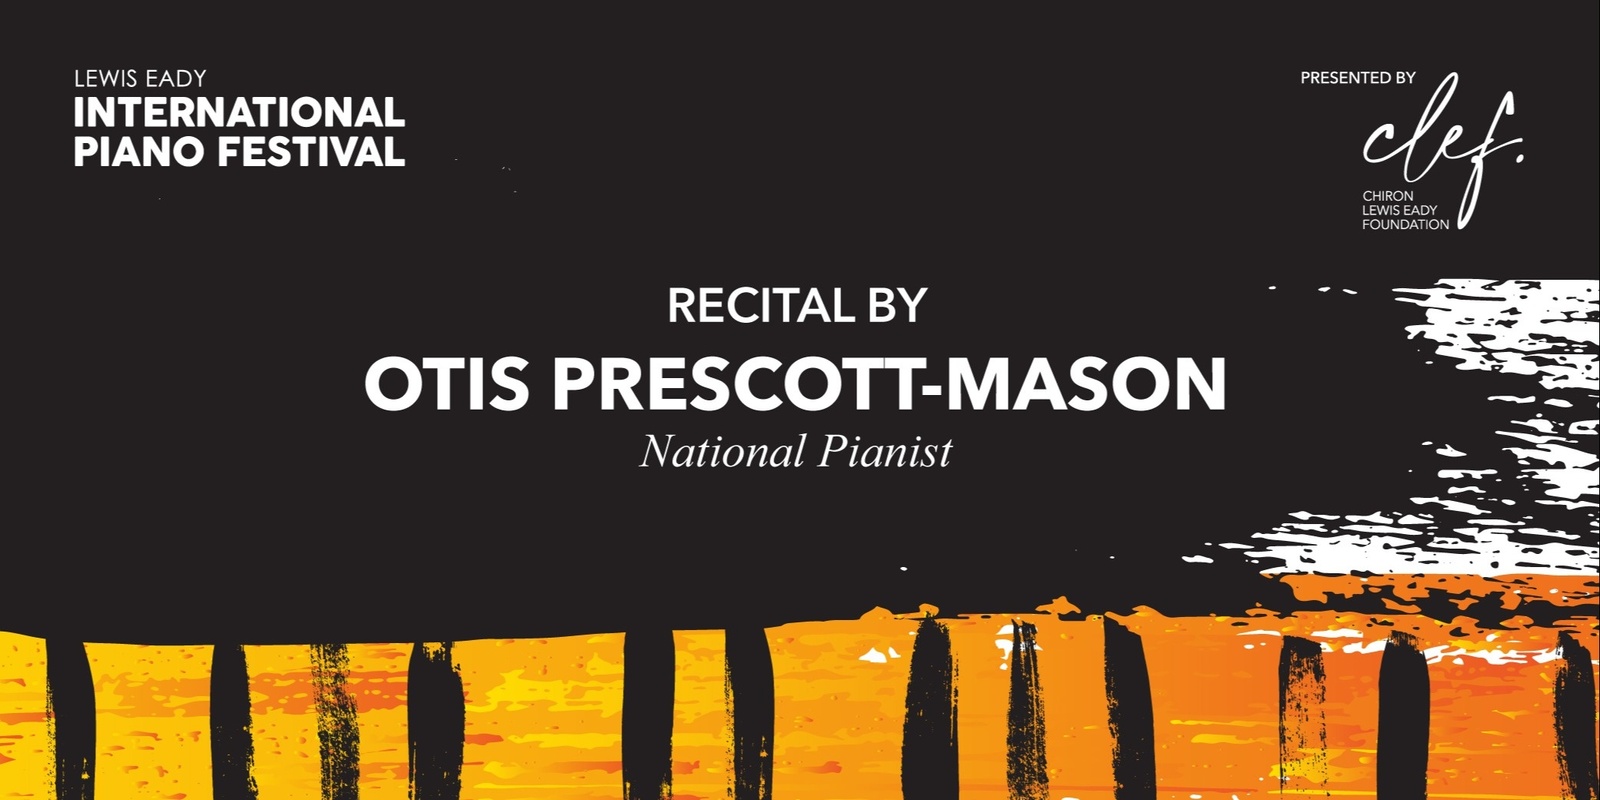 Banner image for LEWIS EADY INTERNATIONAL PIANO FESTIVAL | Recital by Otis Prescott-Mason